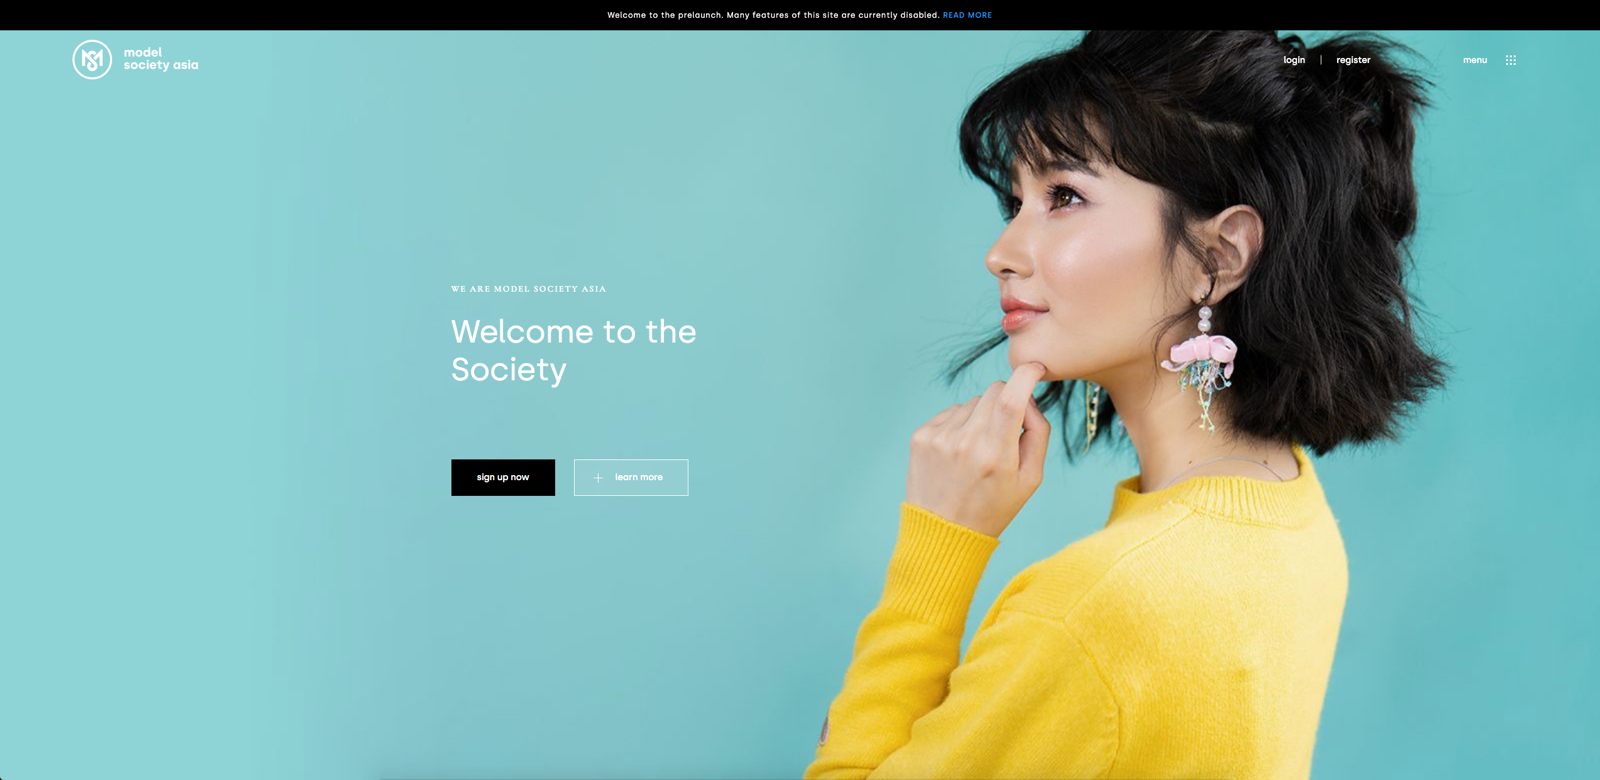 KOS Design - Model Society Asia